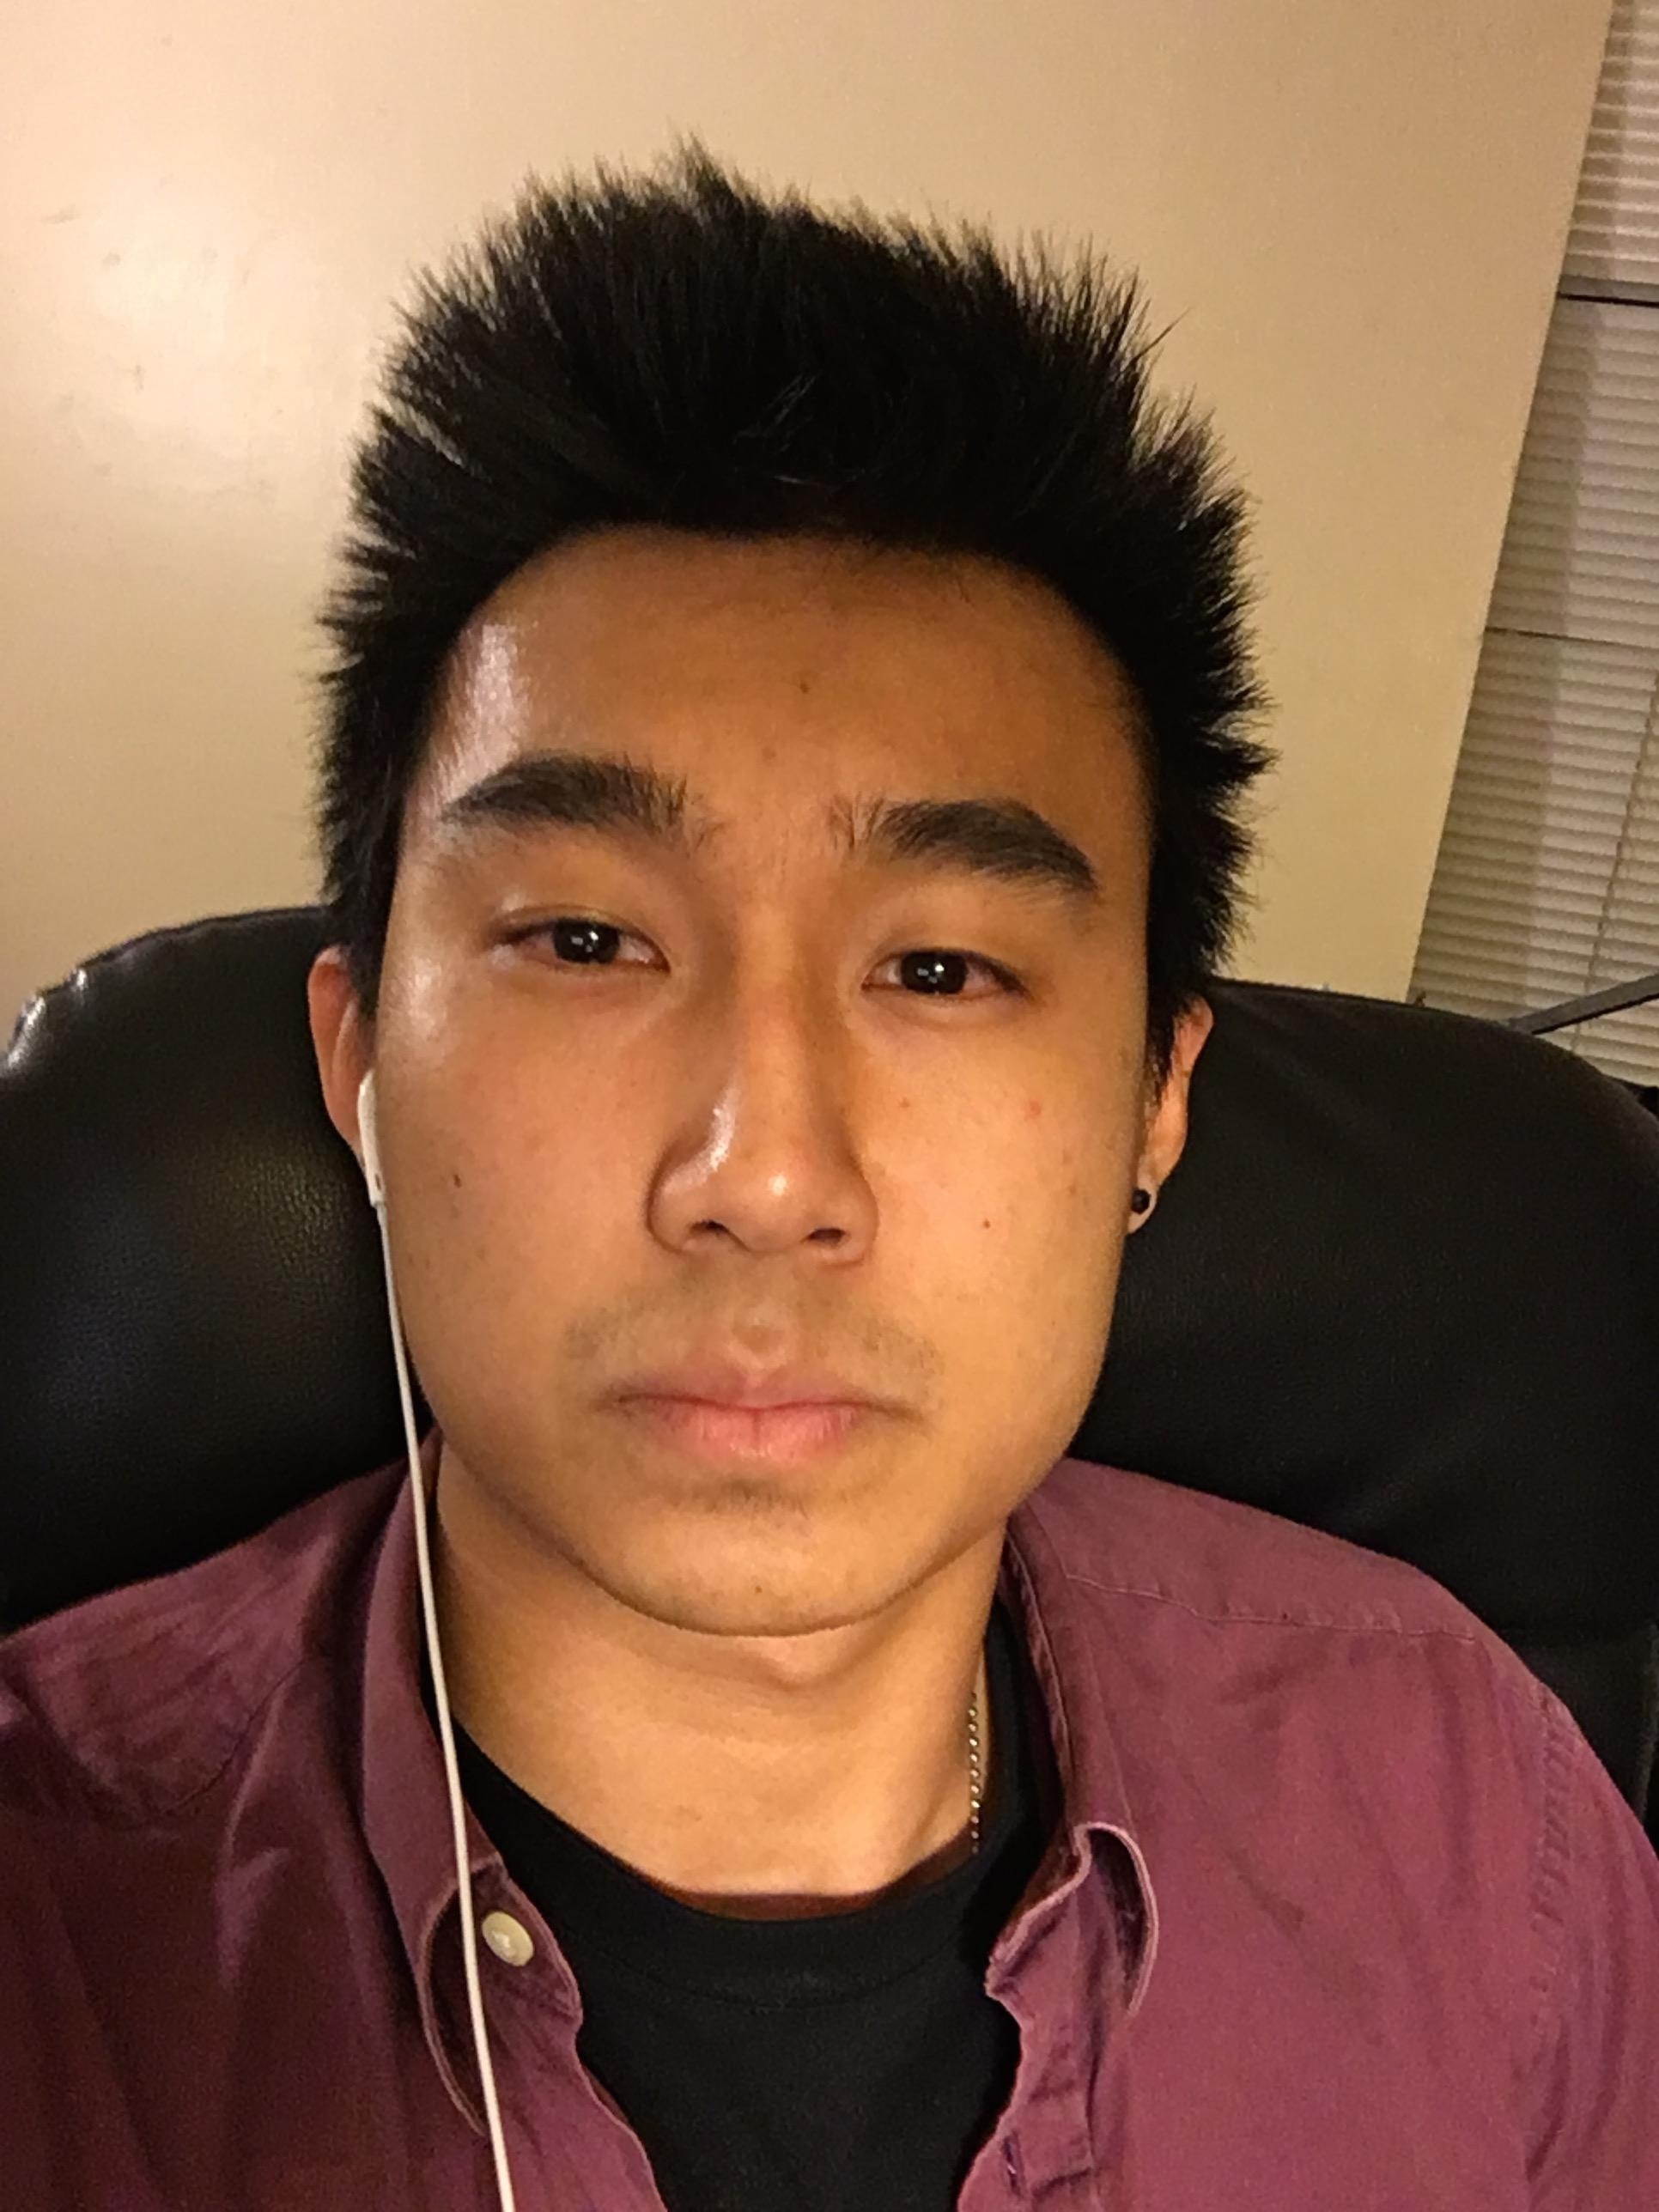 Best Asian Male Hairstyles Reddit - Wavy Haircut